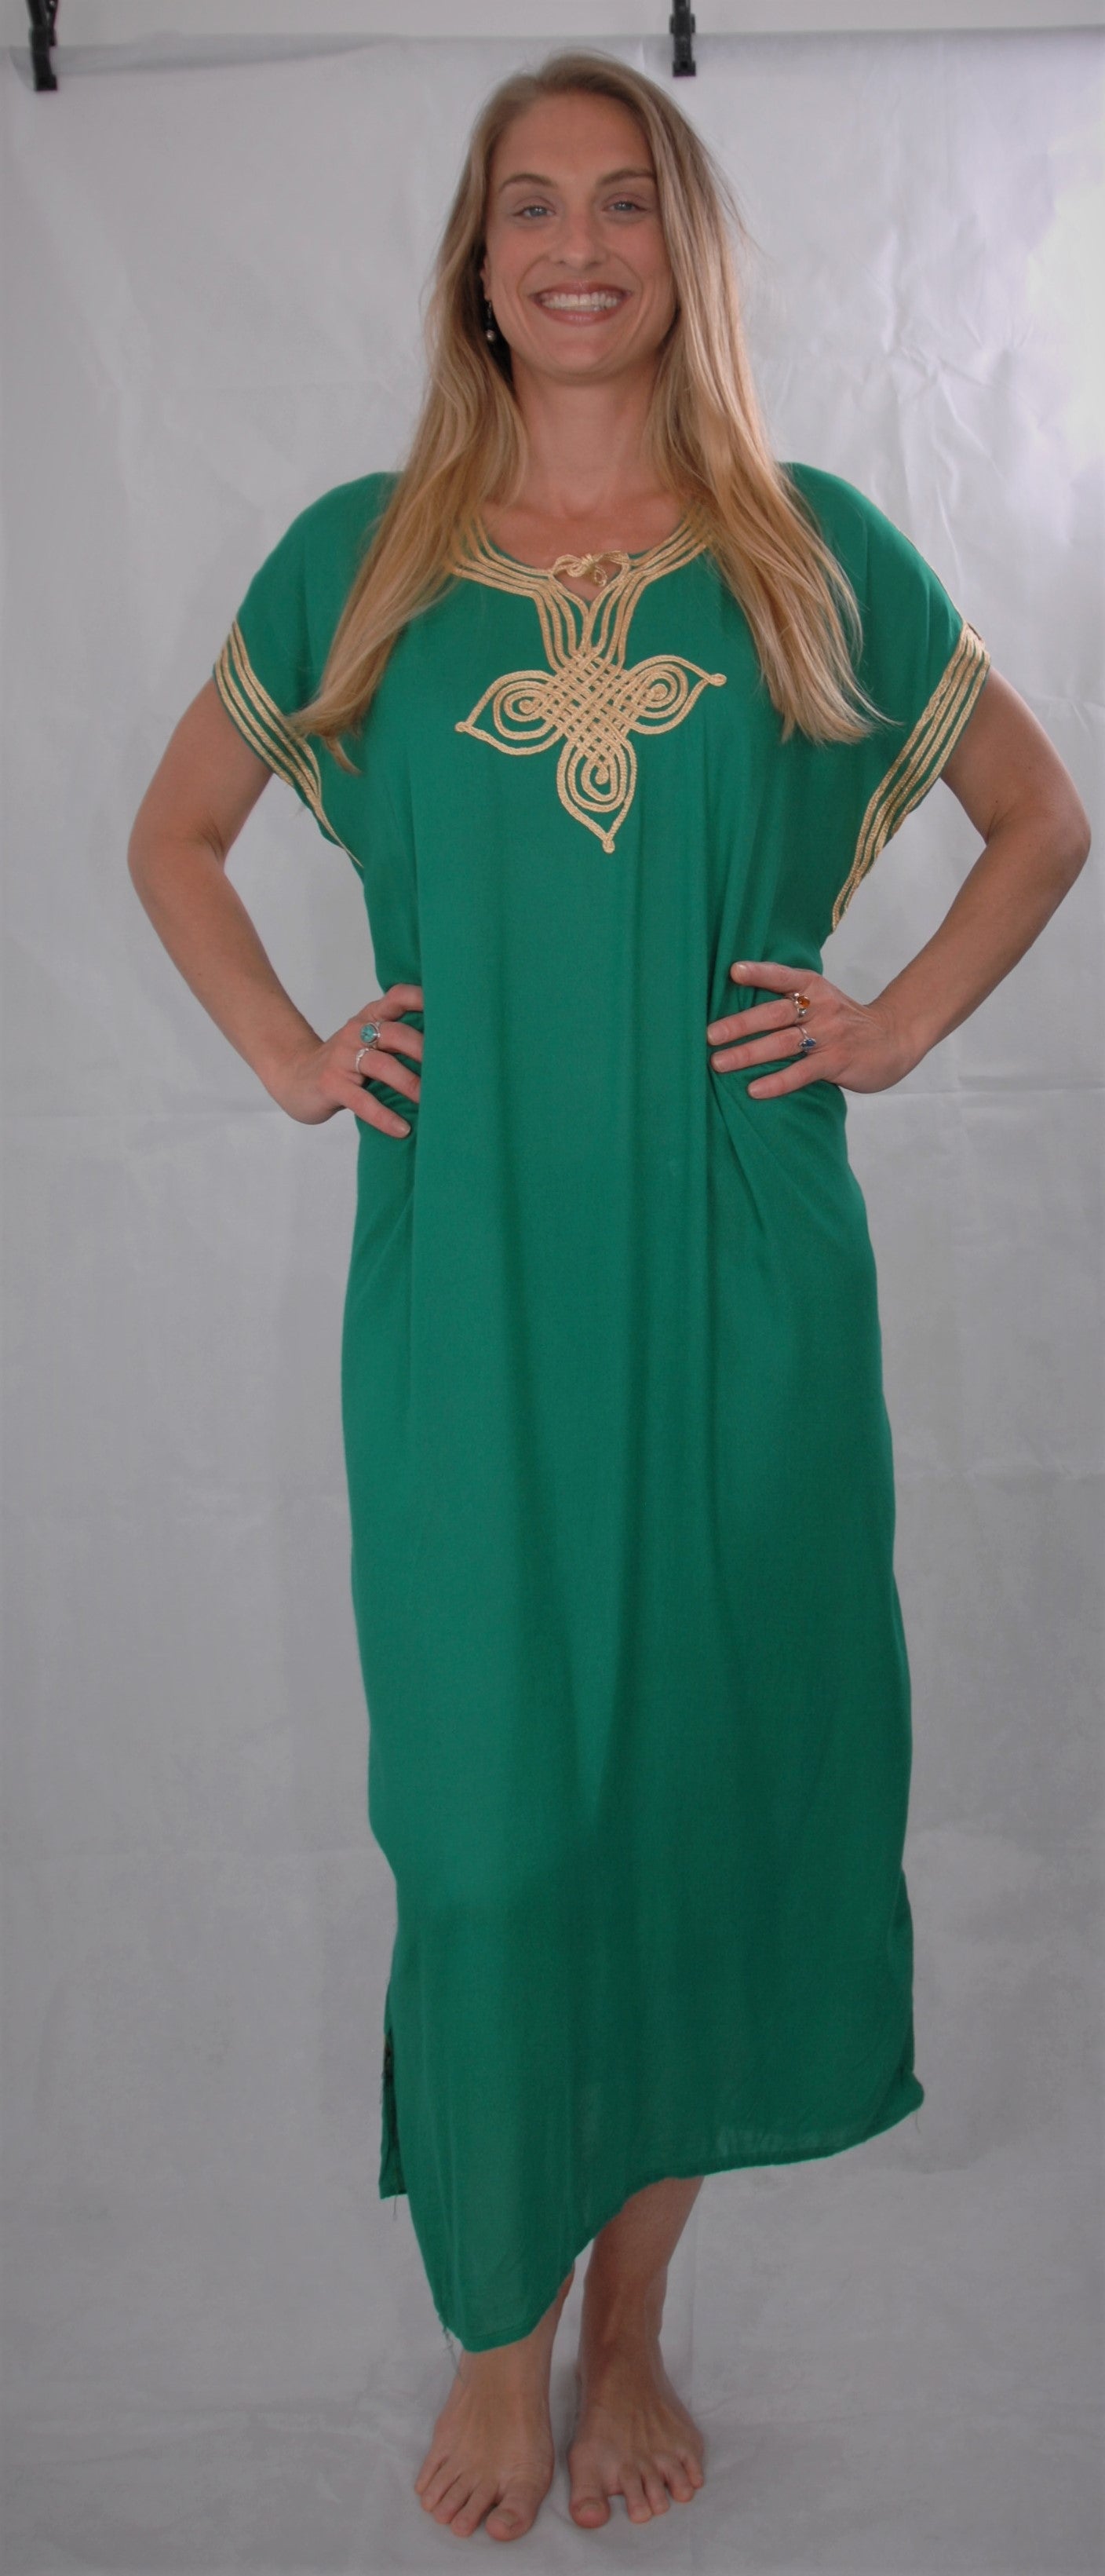 Moroccan kaftan/gondura - green - one size fits all